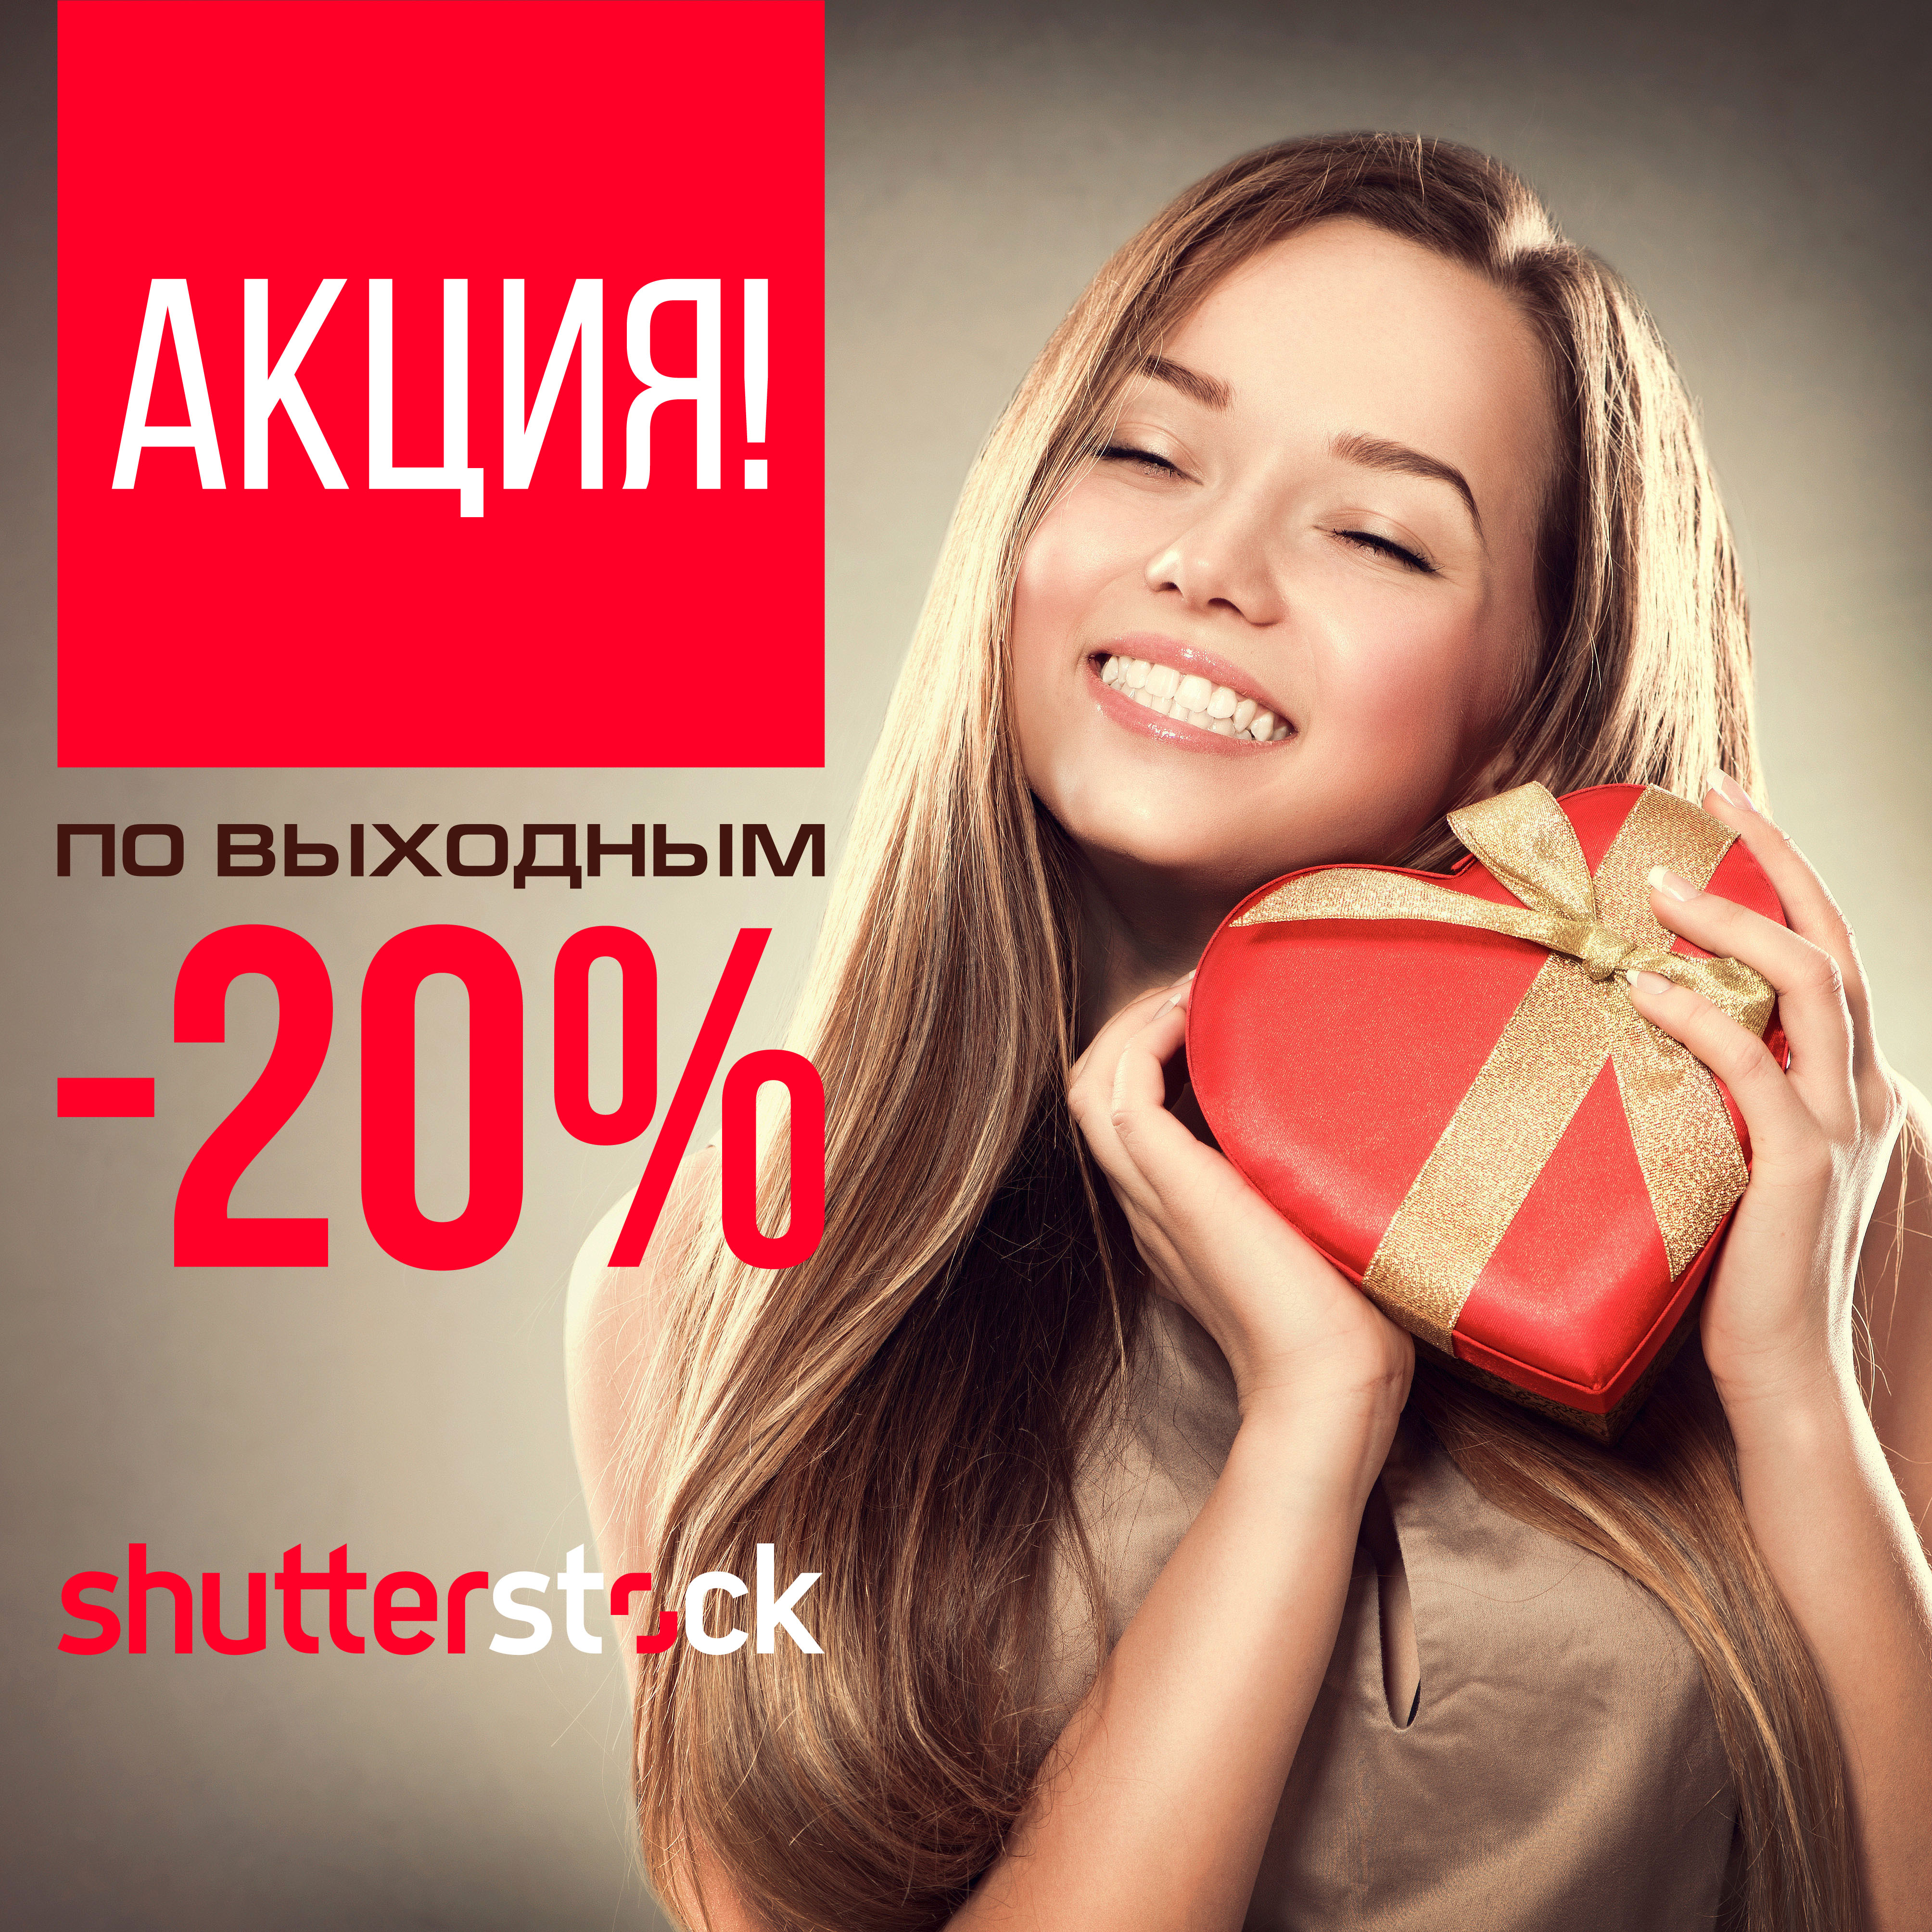 !  20%        Shutterstock!